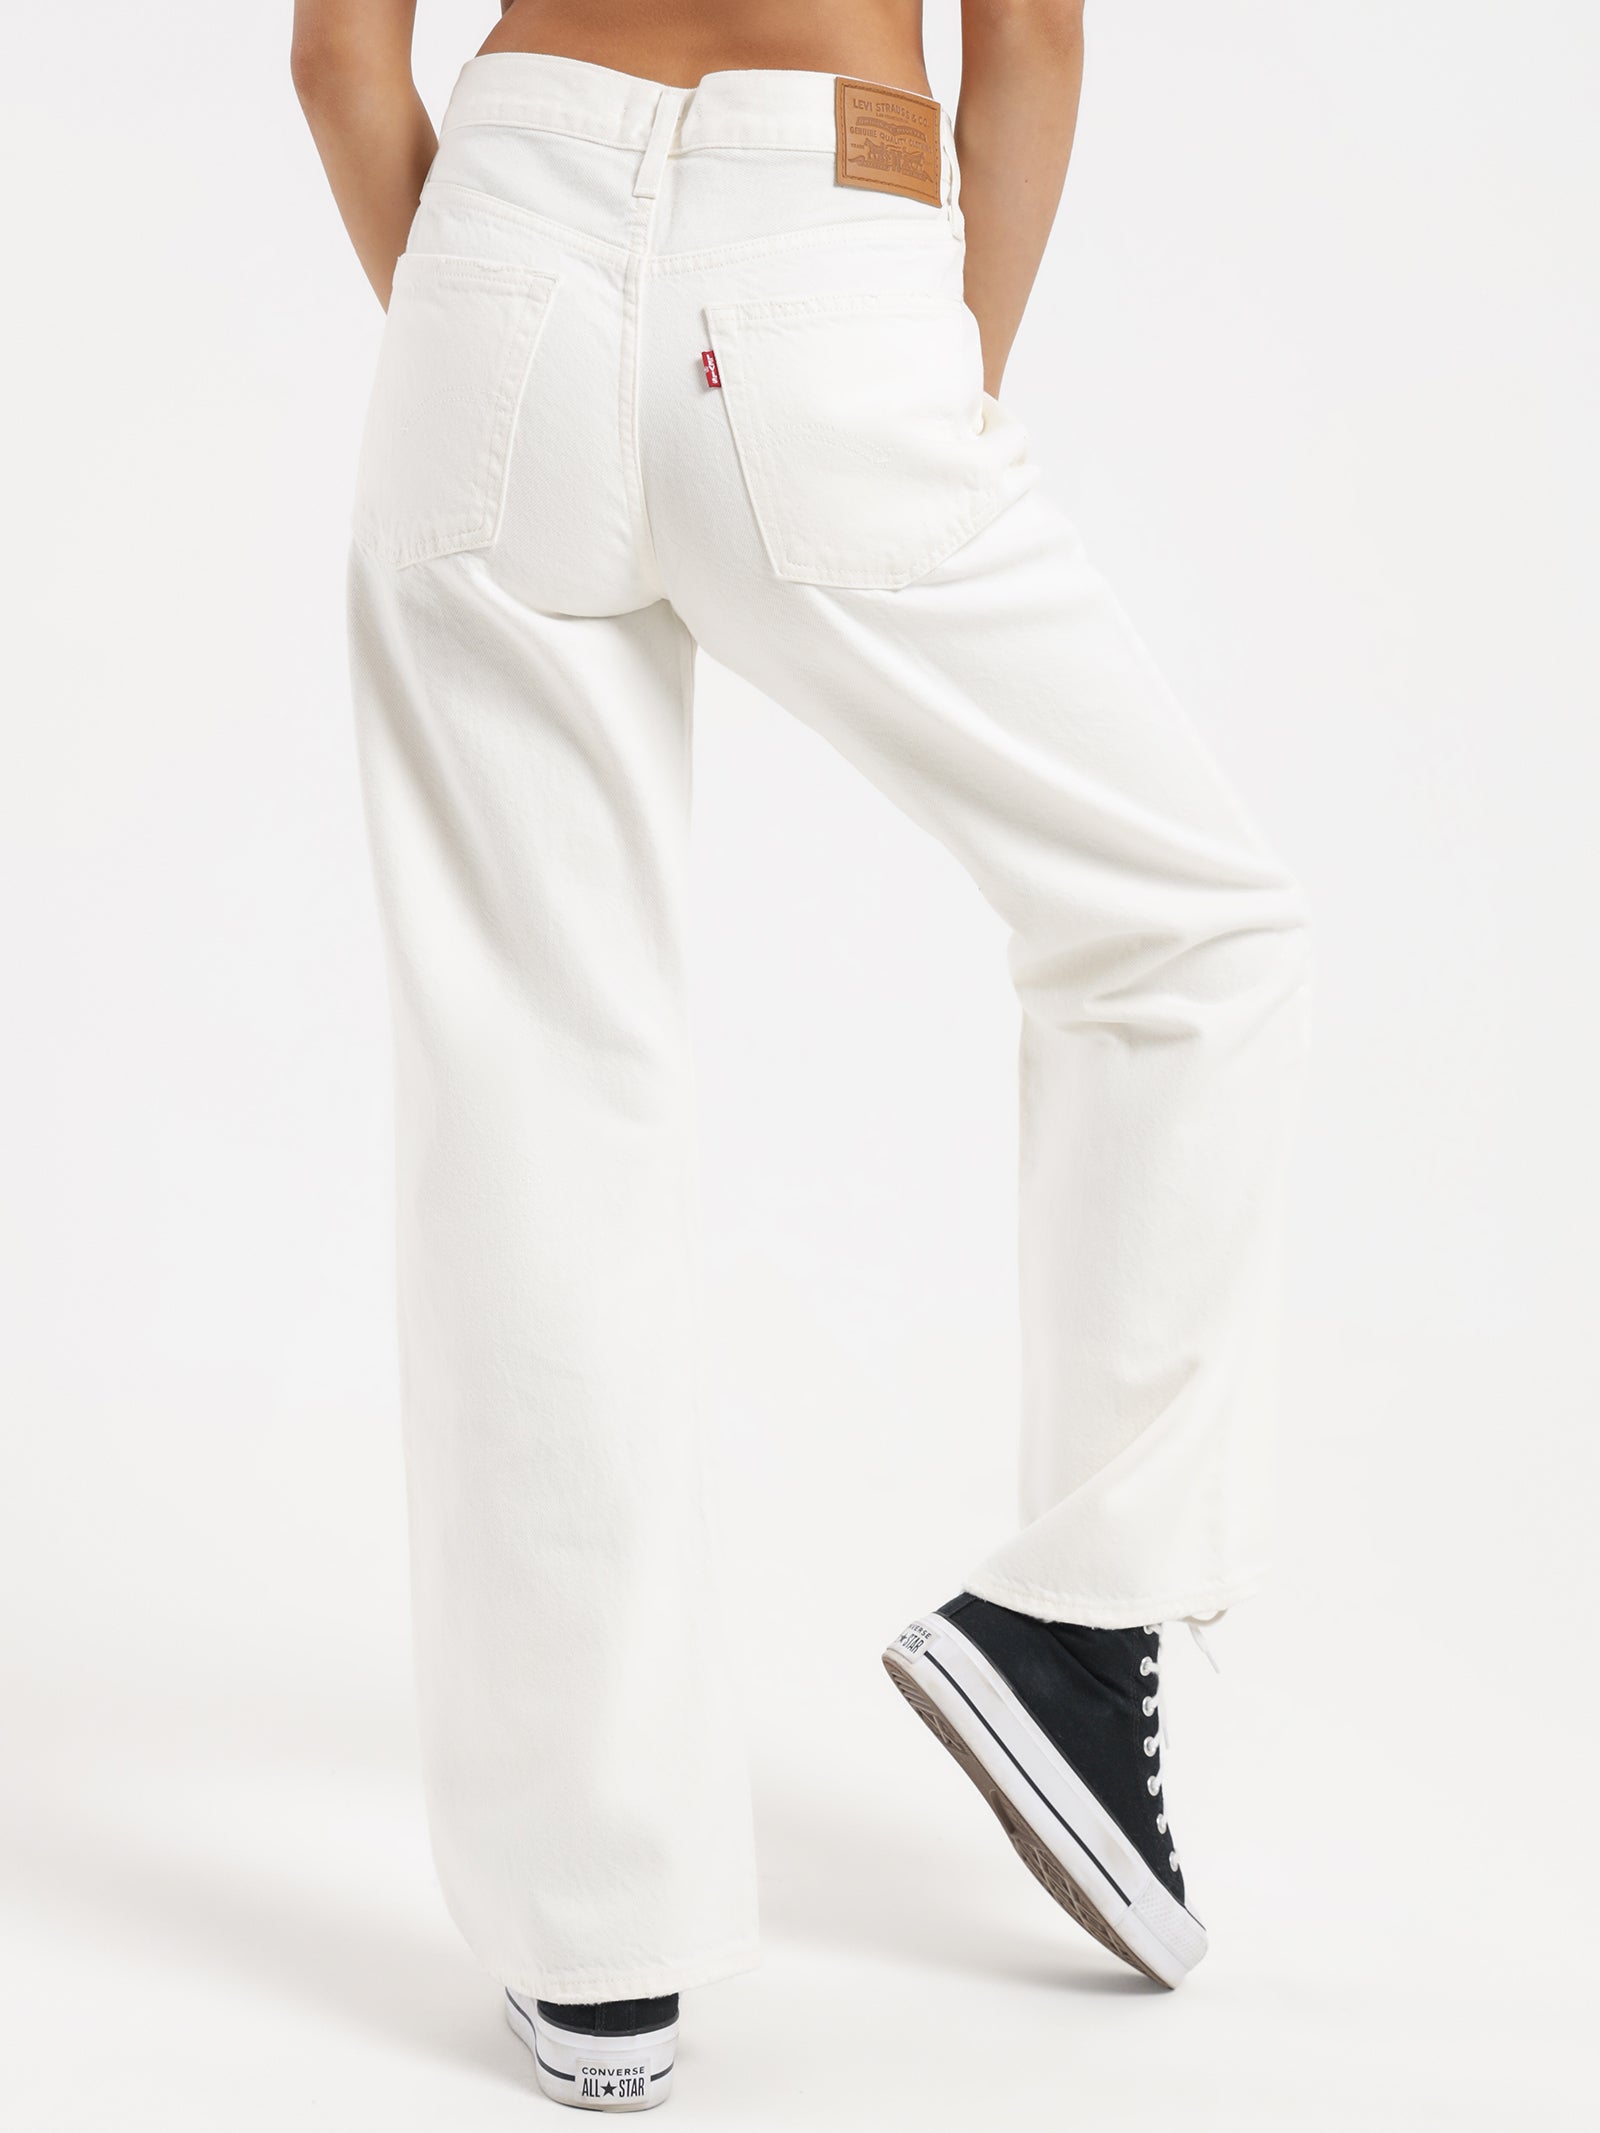 Baggy Trouser Pants - White